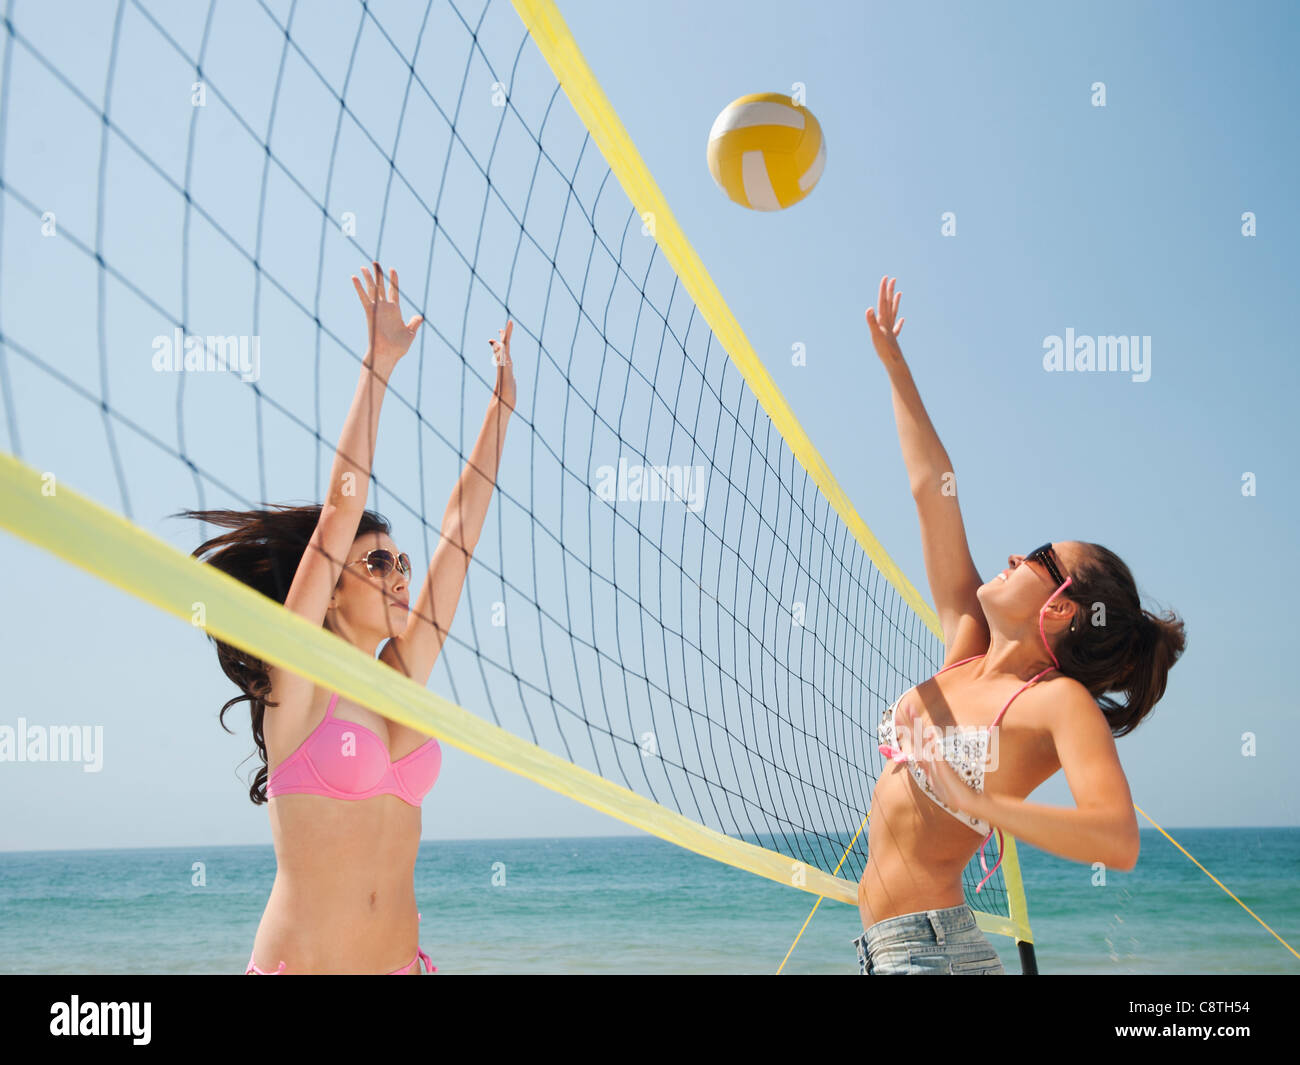 USA, California, Malibu, Two attractive young women playing beach volleyball Stock Photo